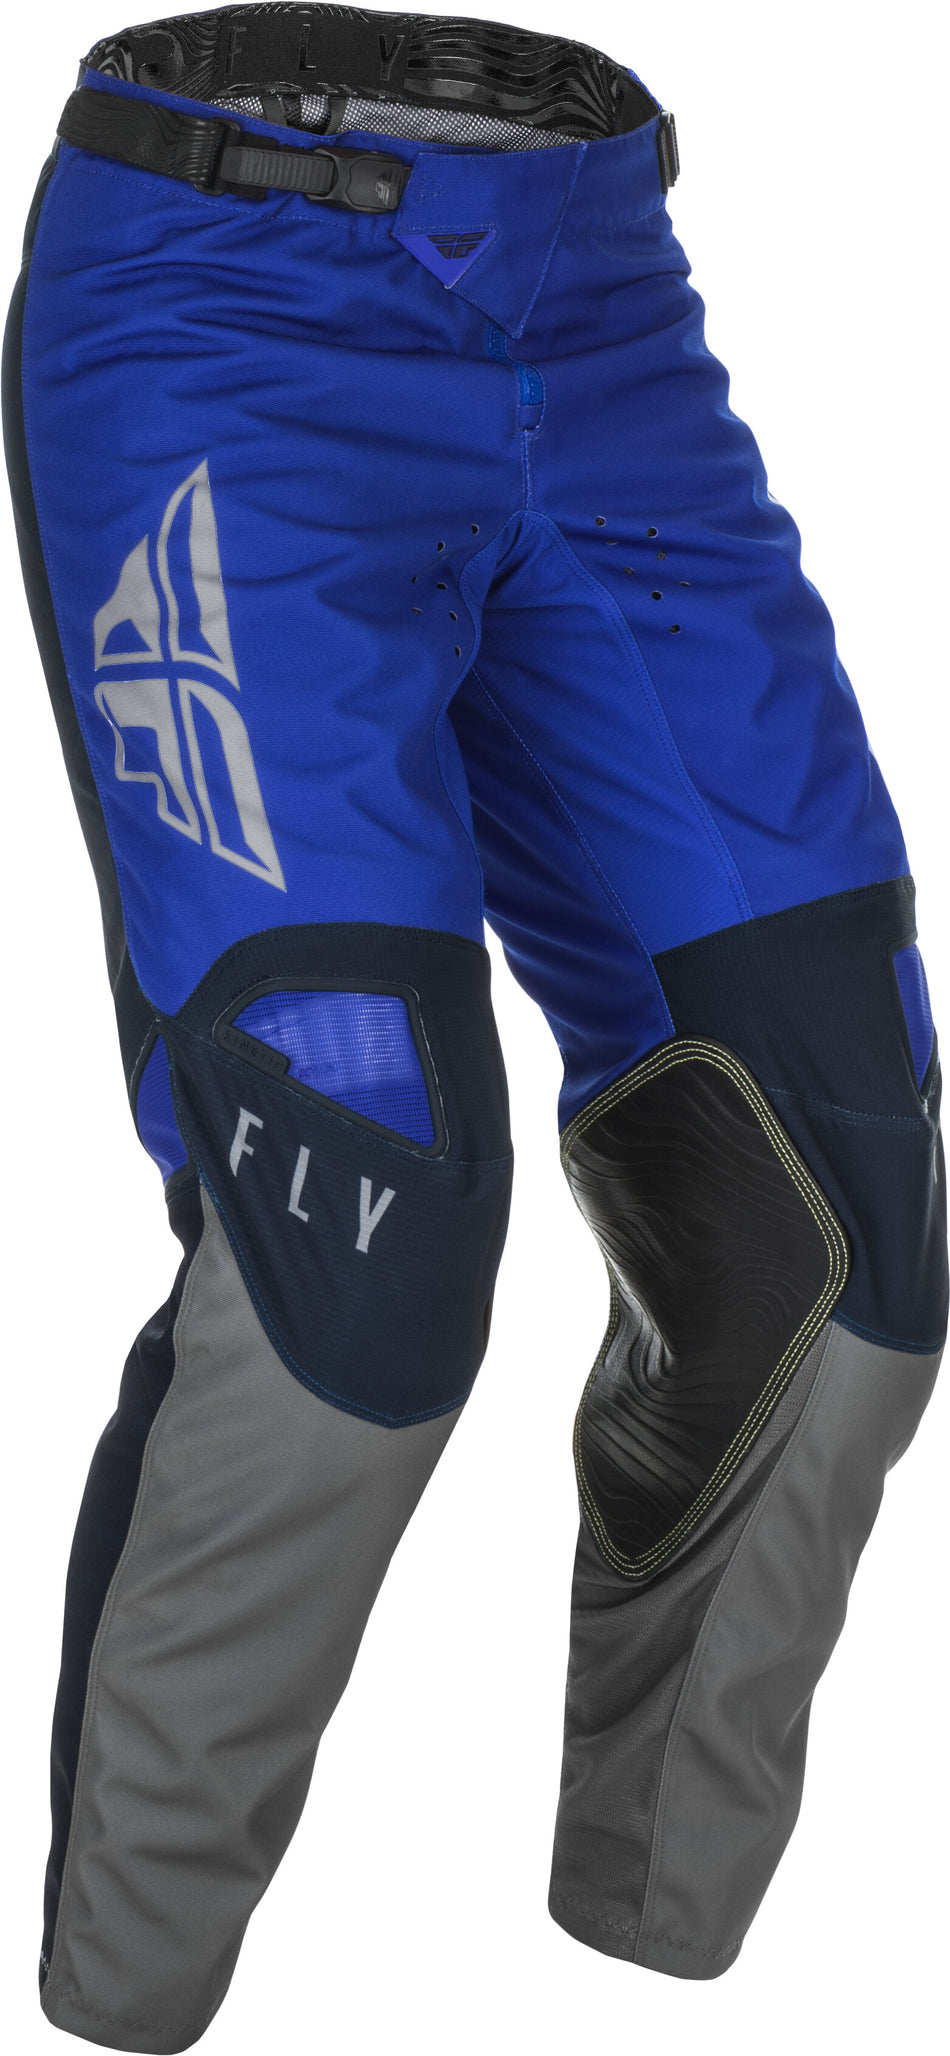 FLY RACING Youth Kinetic K121 Pants Blue/Navy/Grey Sz 22 374-43122